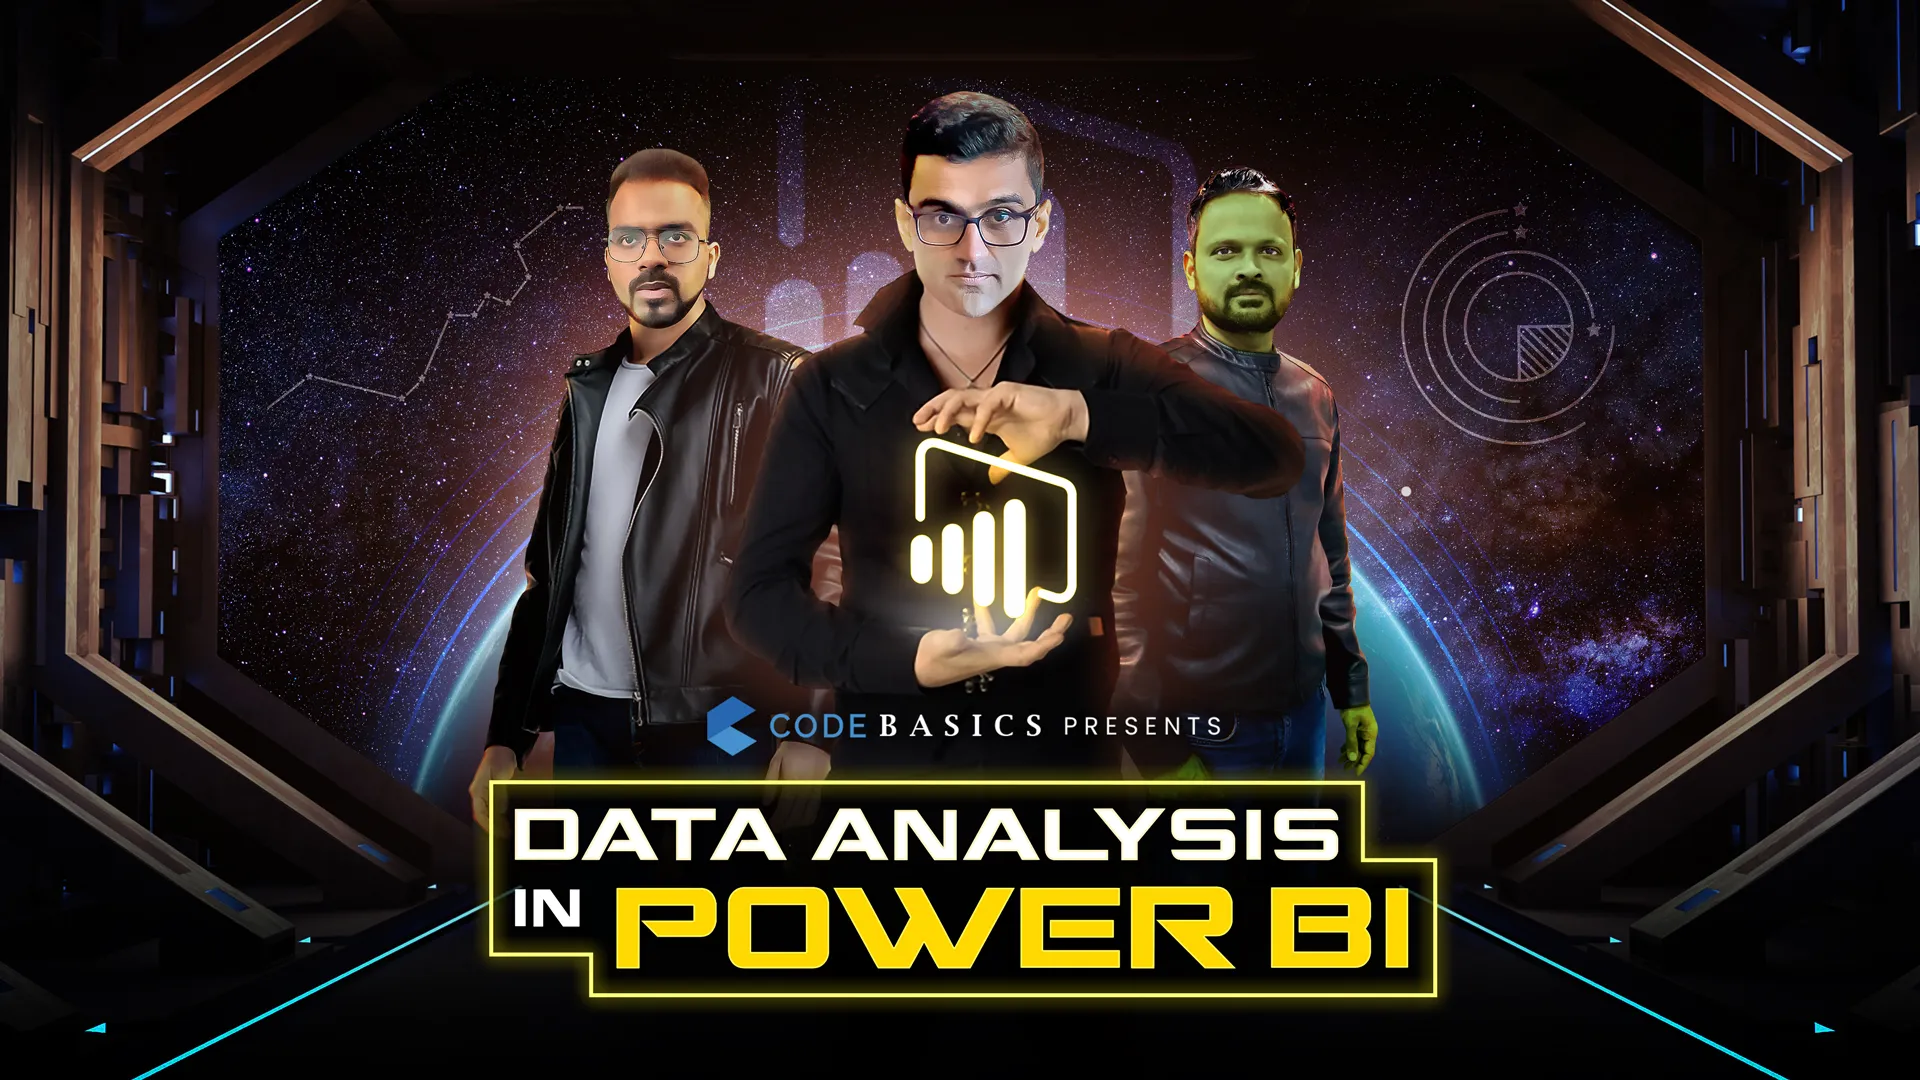 Get Job Ready: Power BI Data Analytics for All Levels 2.0